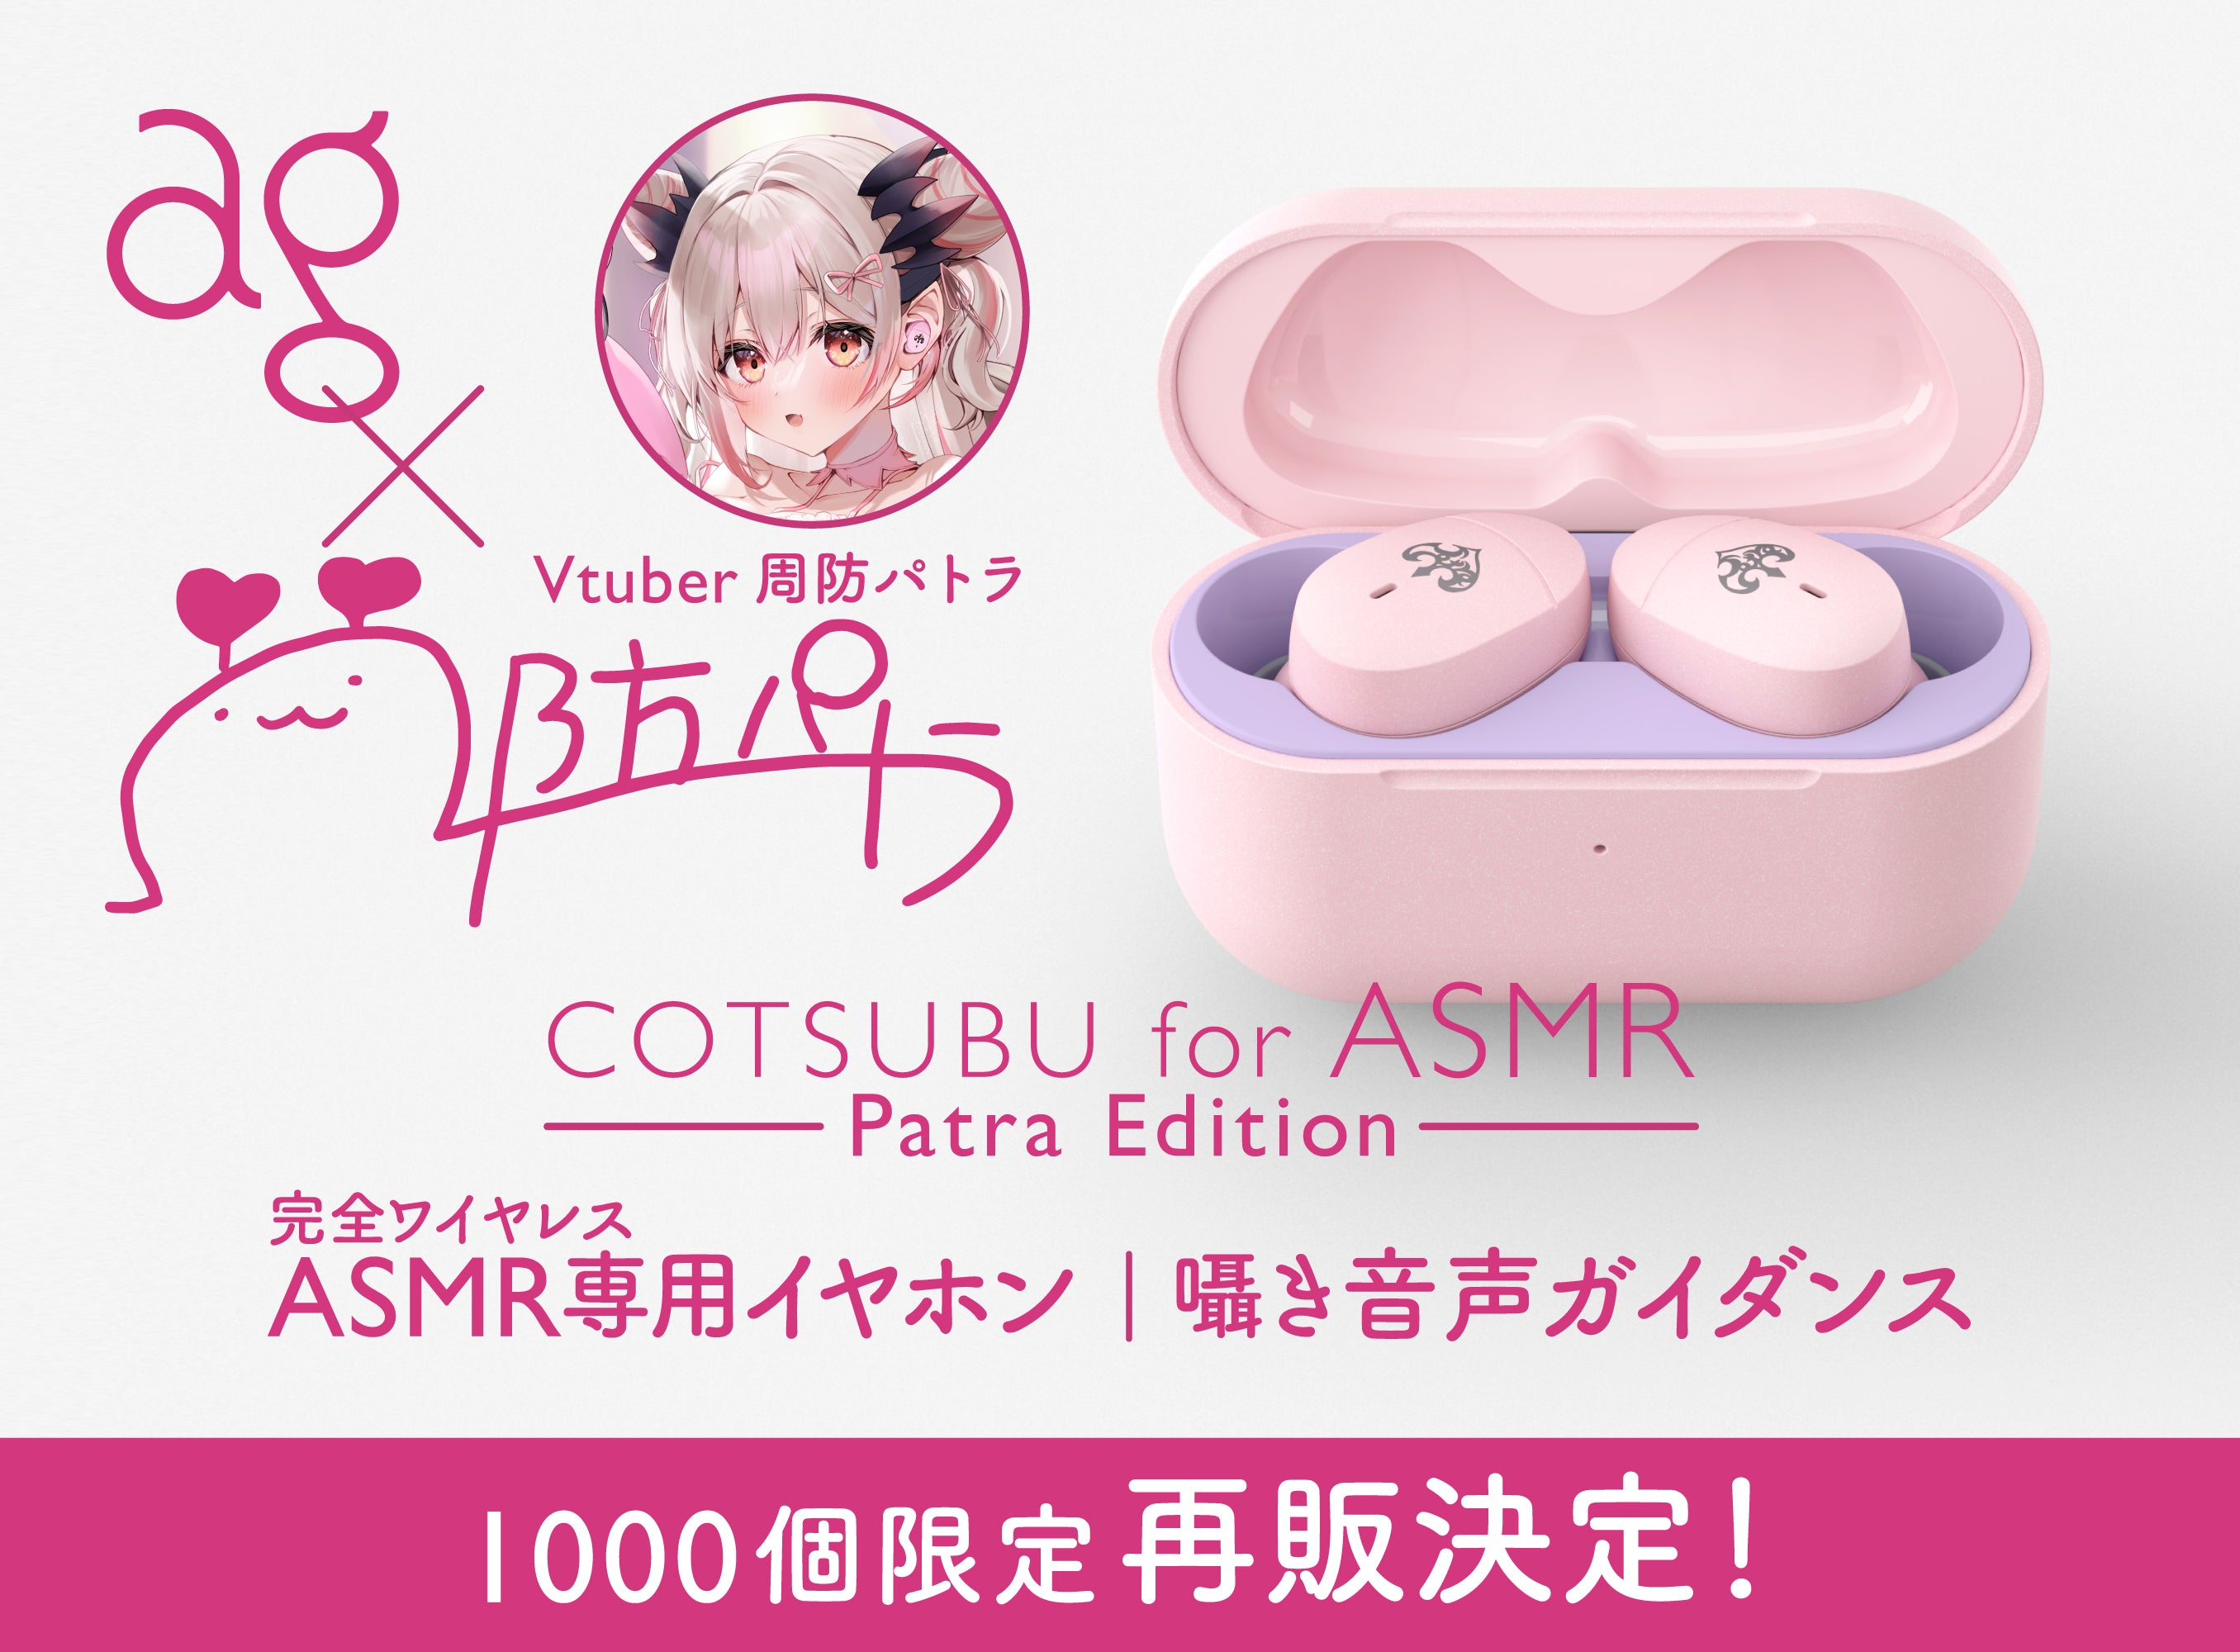 COTSUBU for ASMR −Patra Edition 周防パトラ-